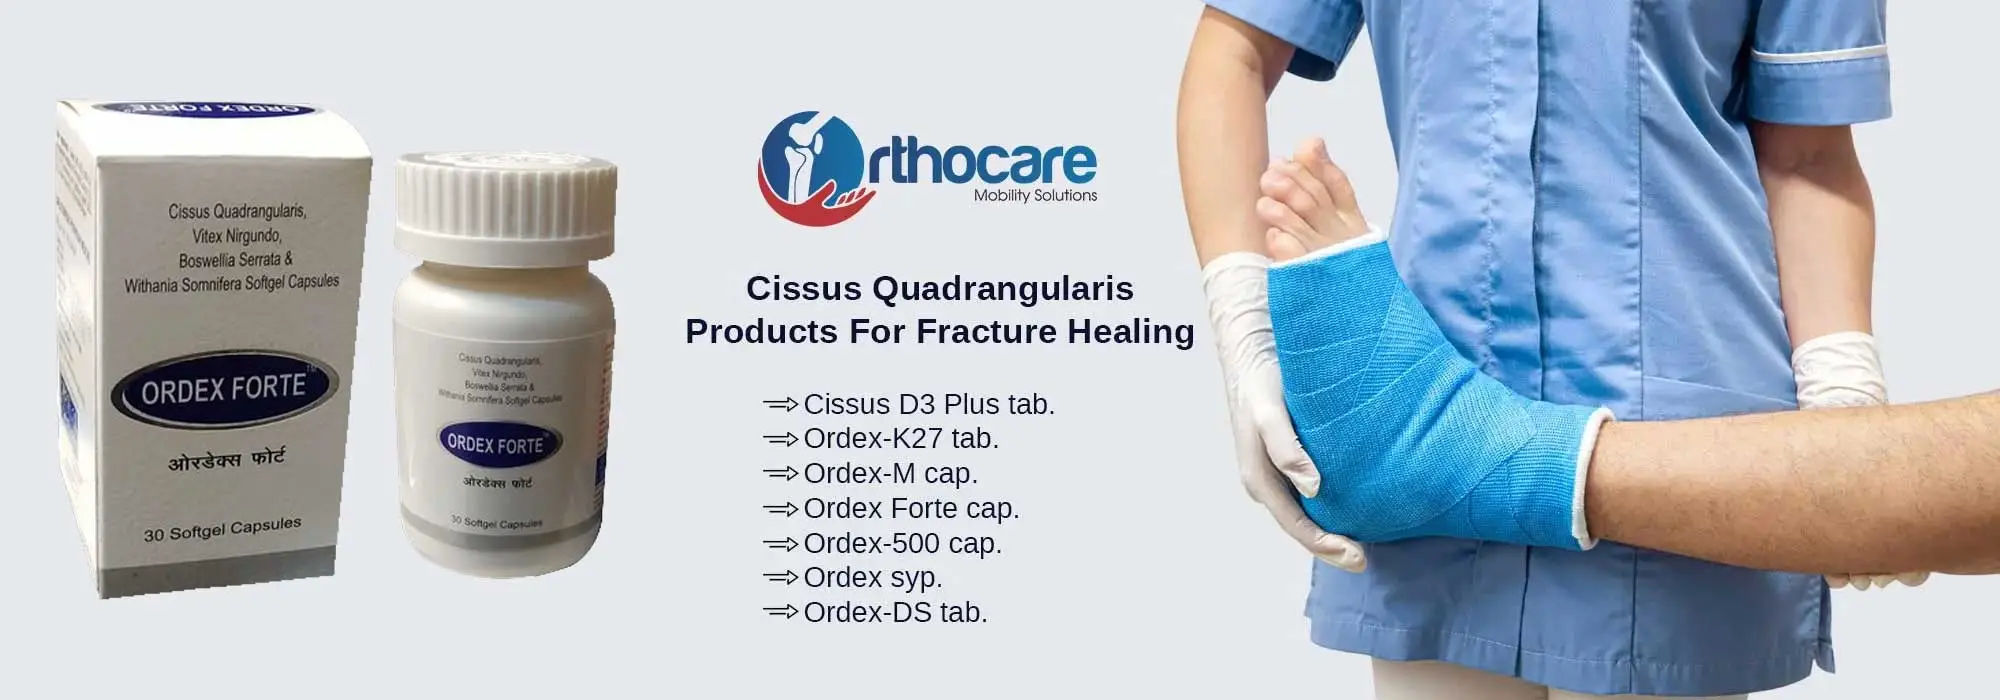 Cissus Quadrangularis Products For Fracture Healing Suppliers in Kendrapara